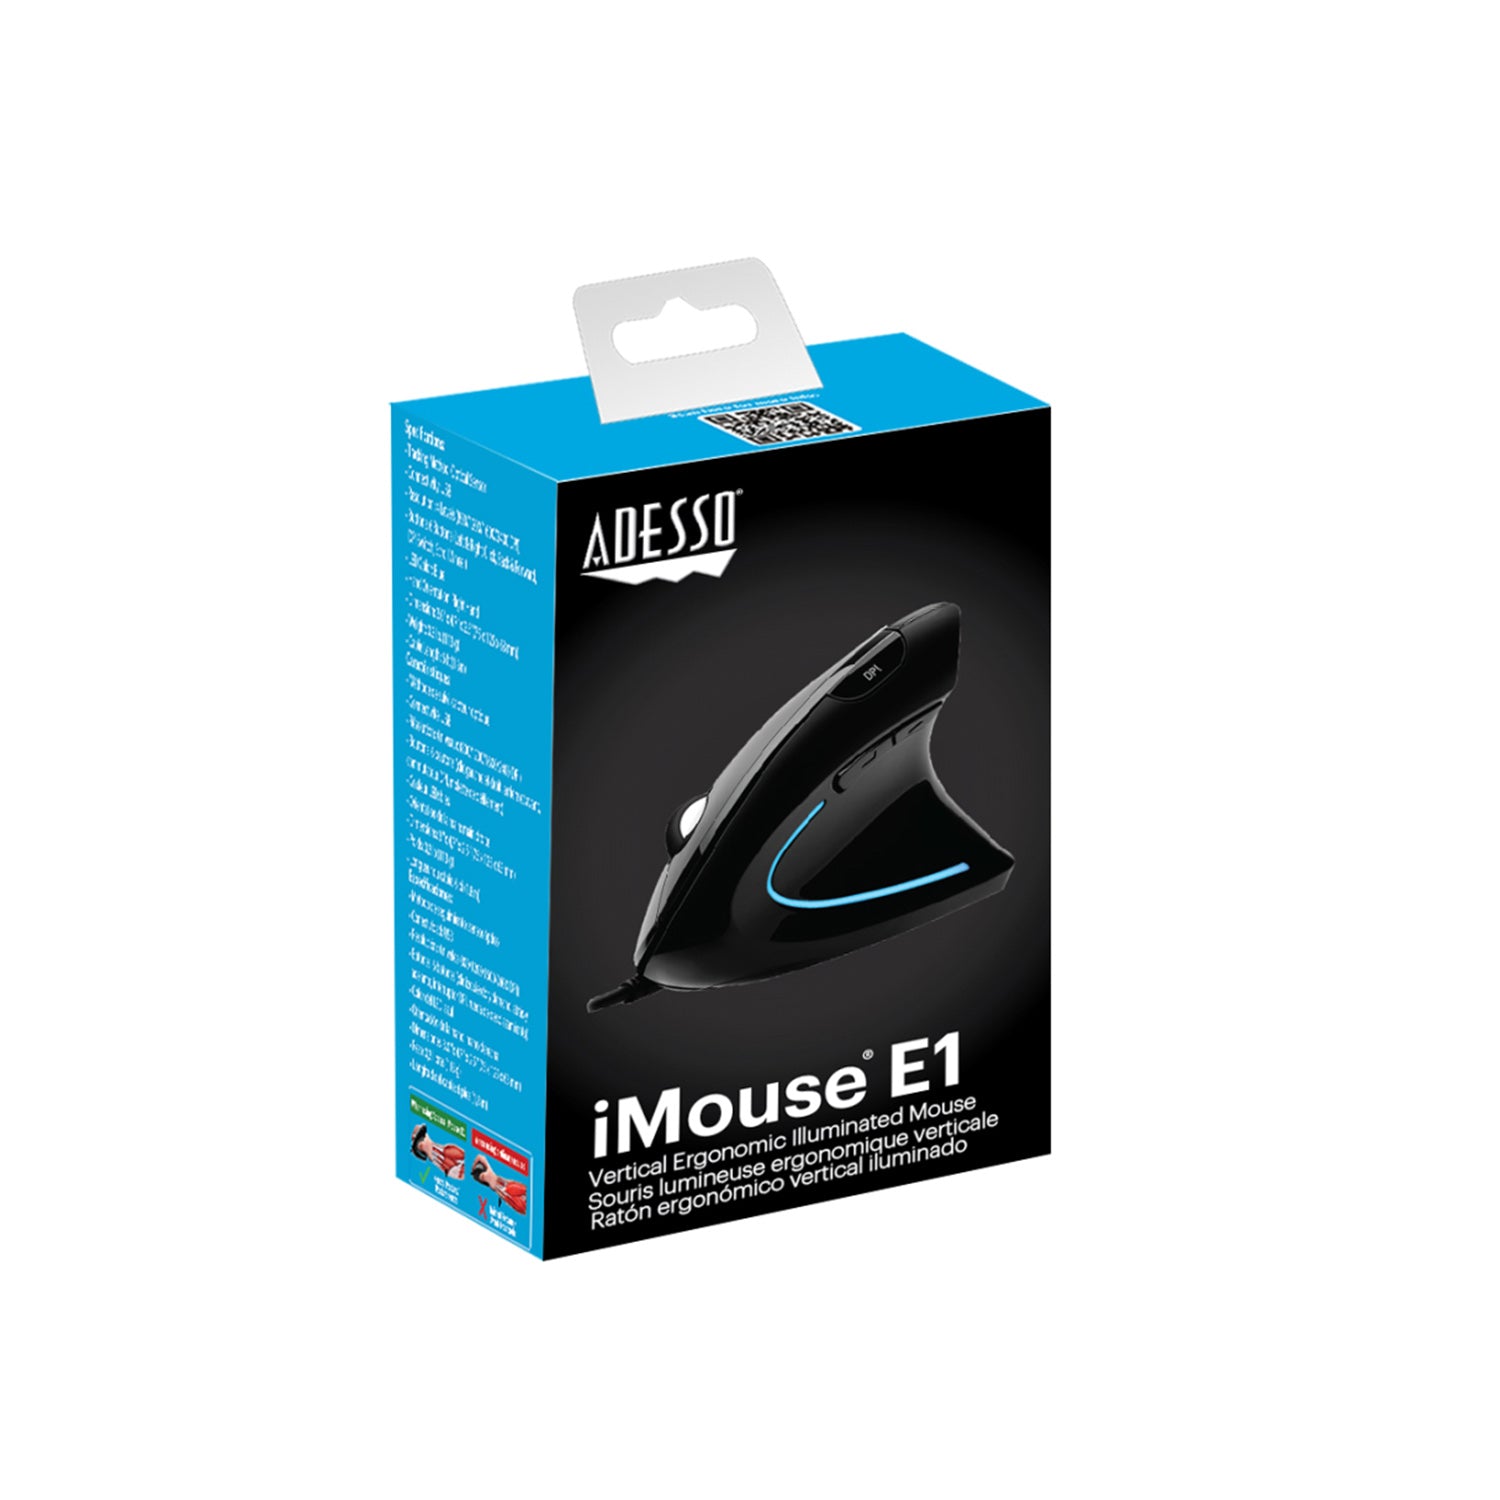 Adesso iMouse E1 Vertical Ergonomic Illuminated Mouse SpadezStore